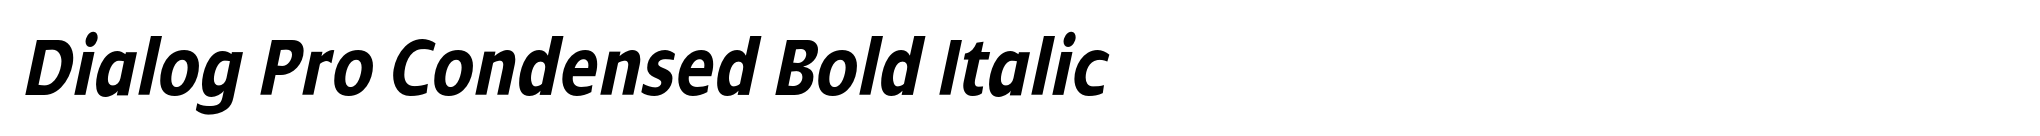 Dialog Pro Condensed Bold Italic image